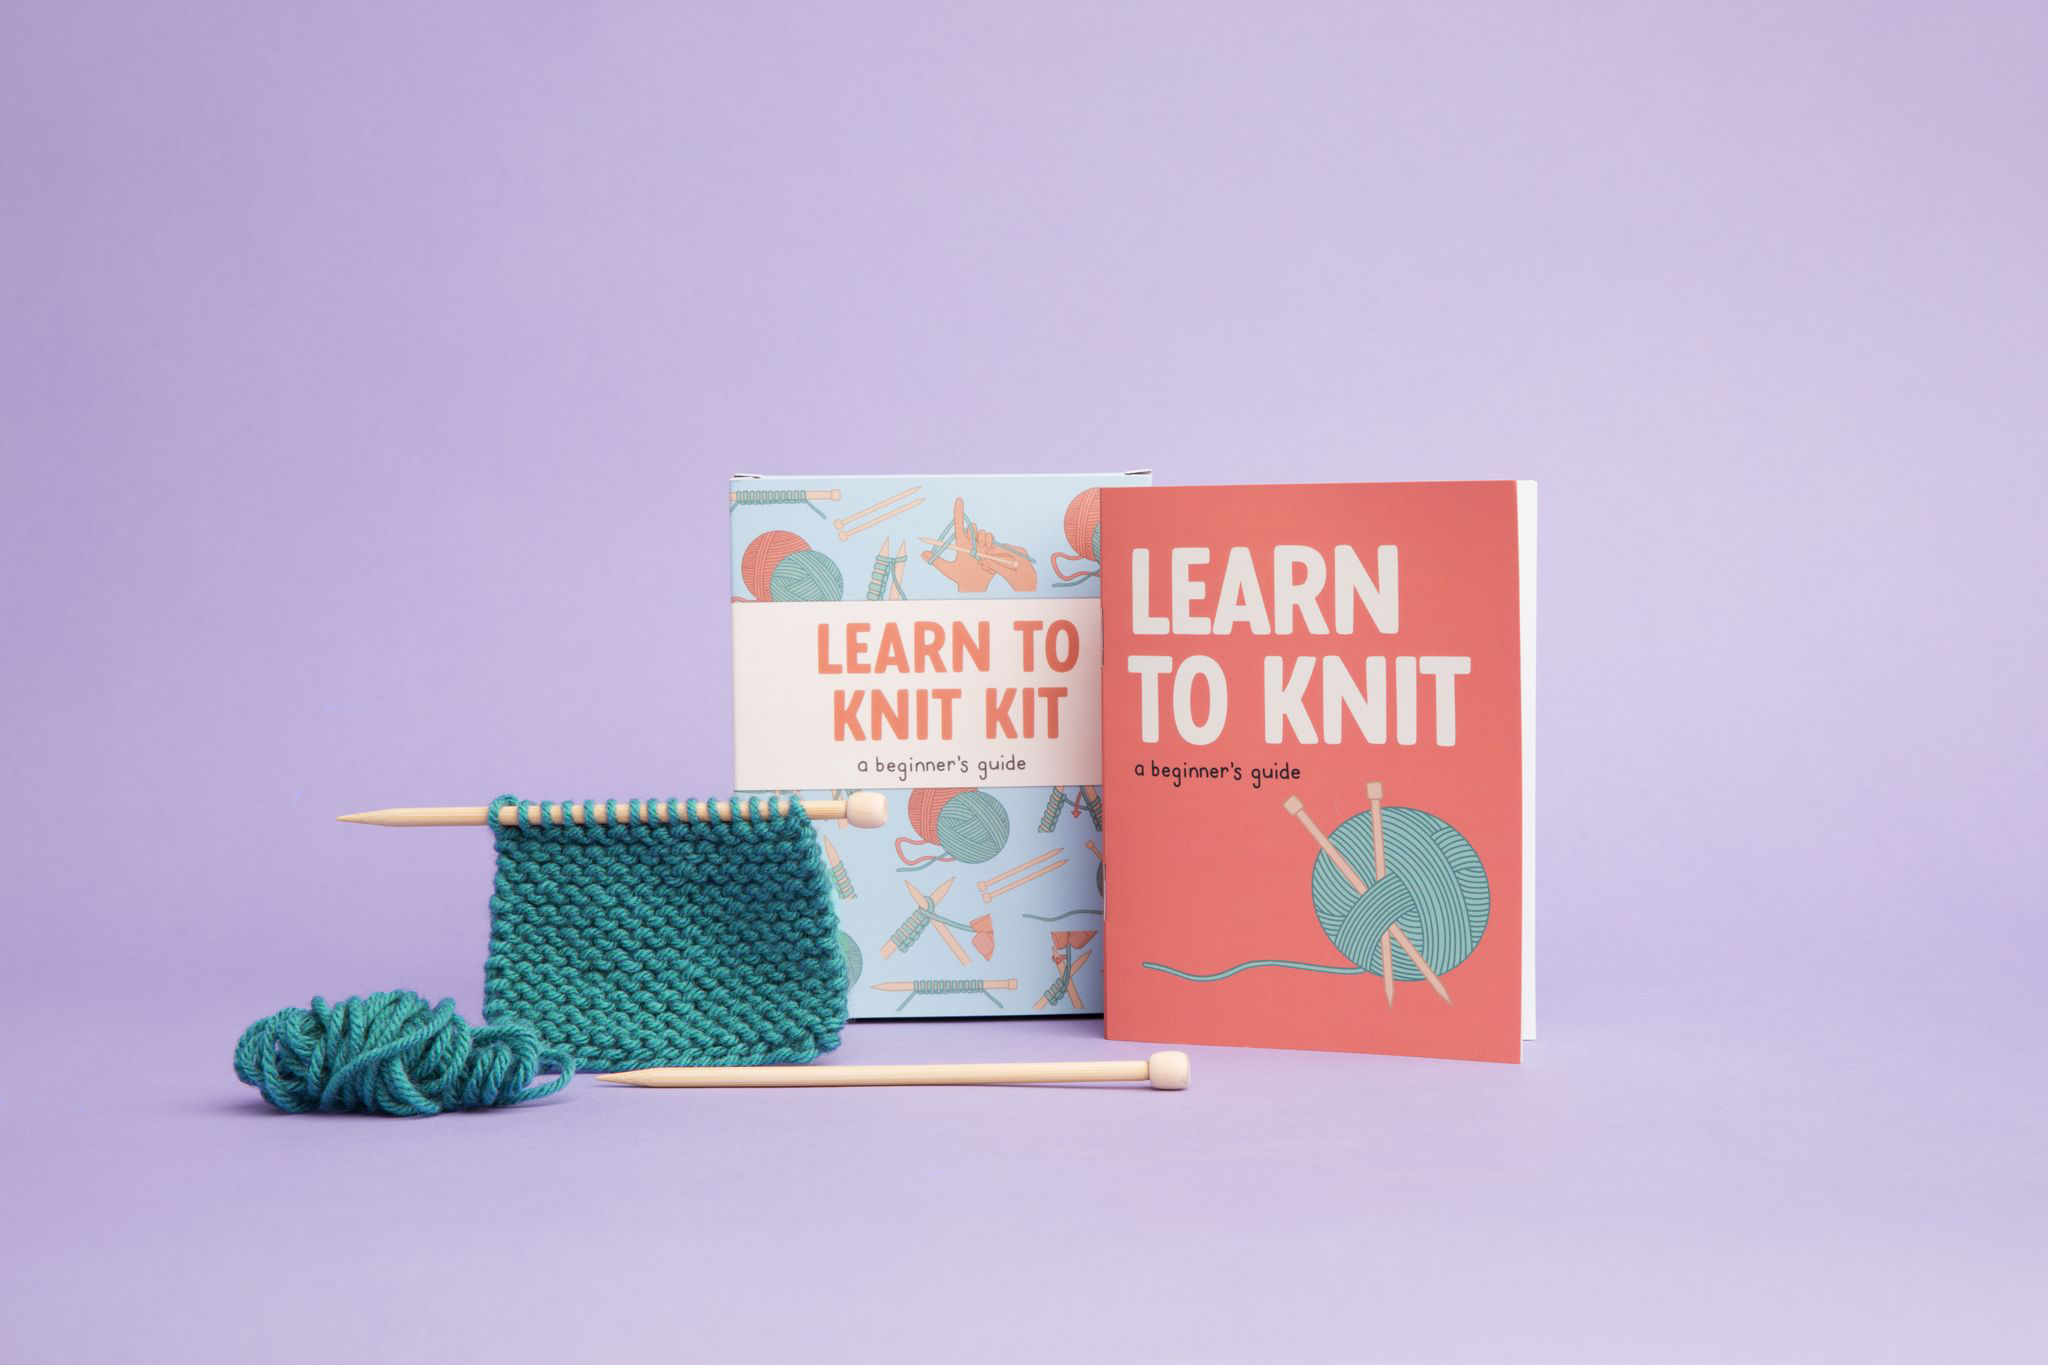 Learn To Punch Needle Kit – threadbook